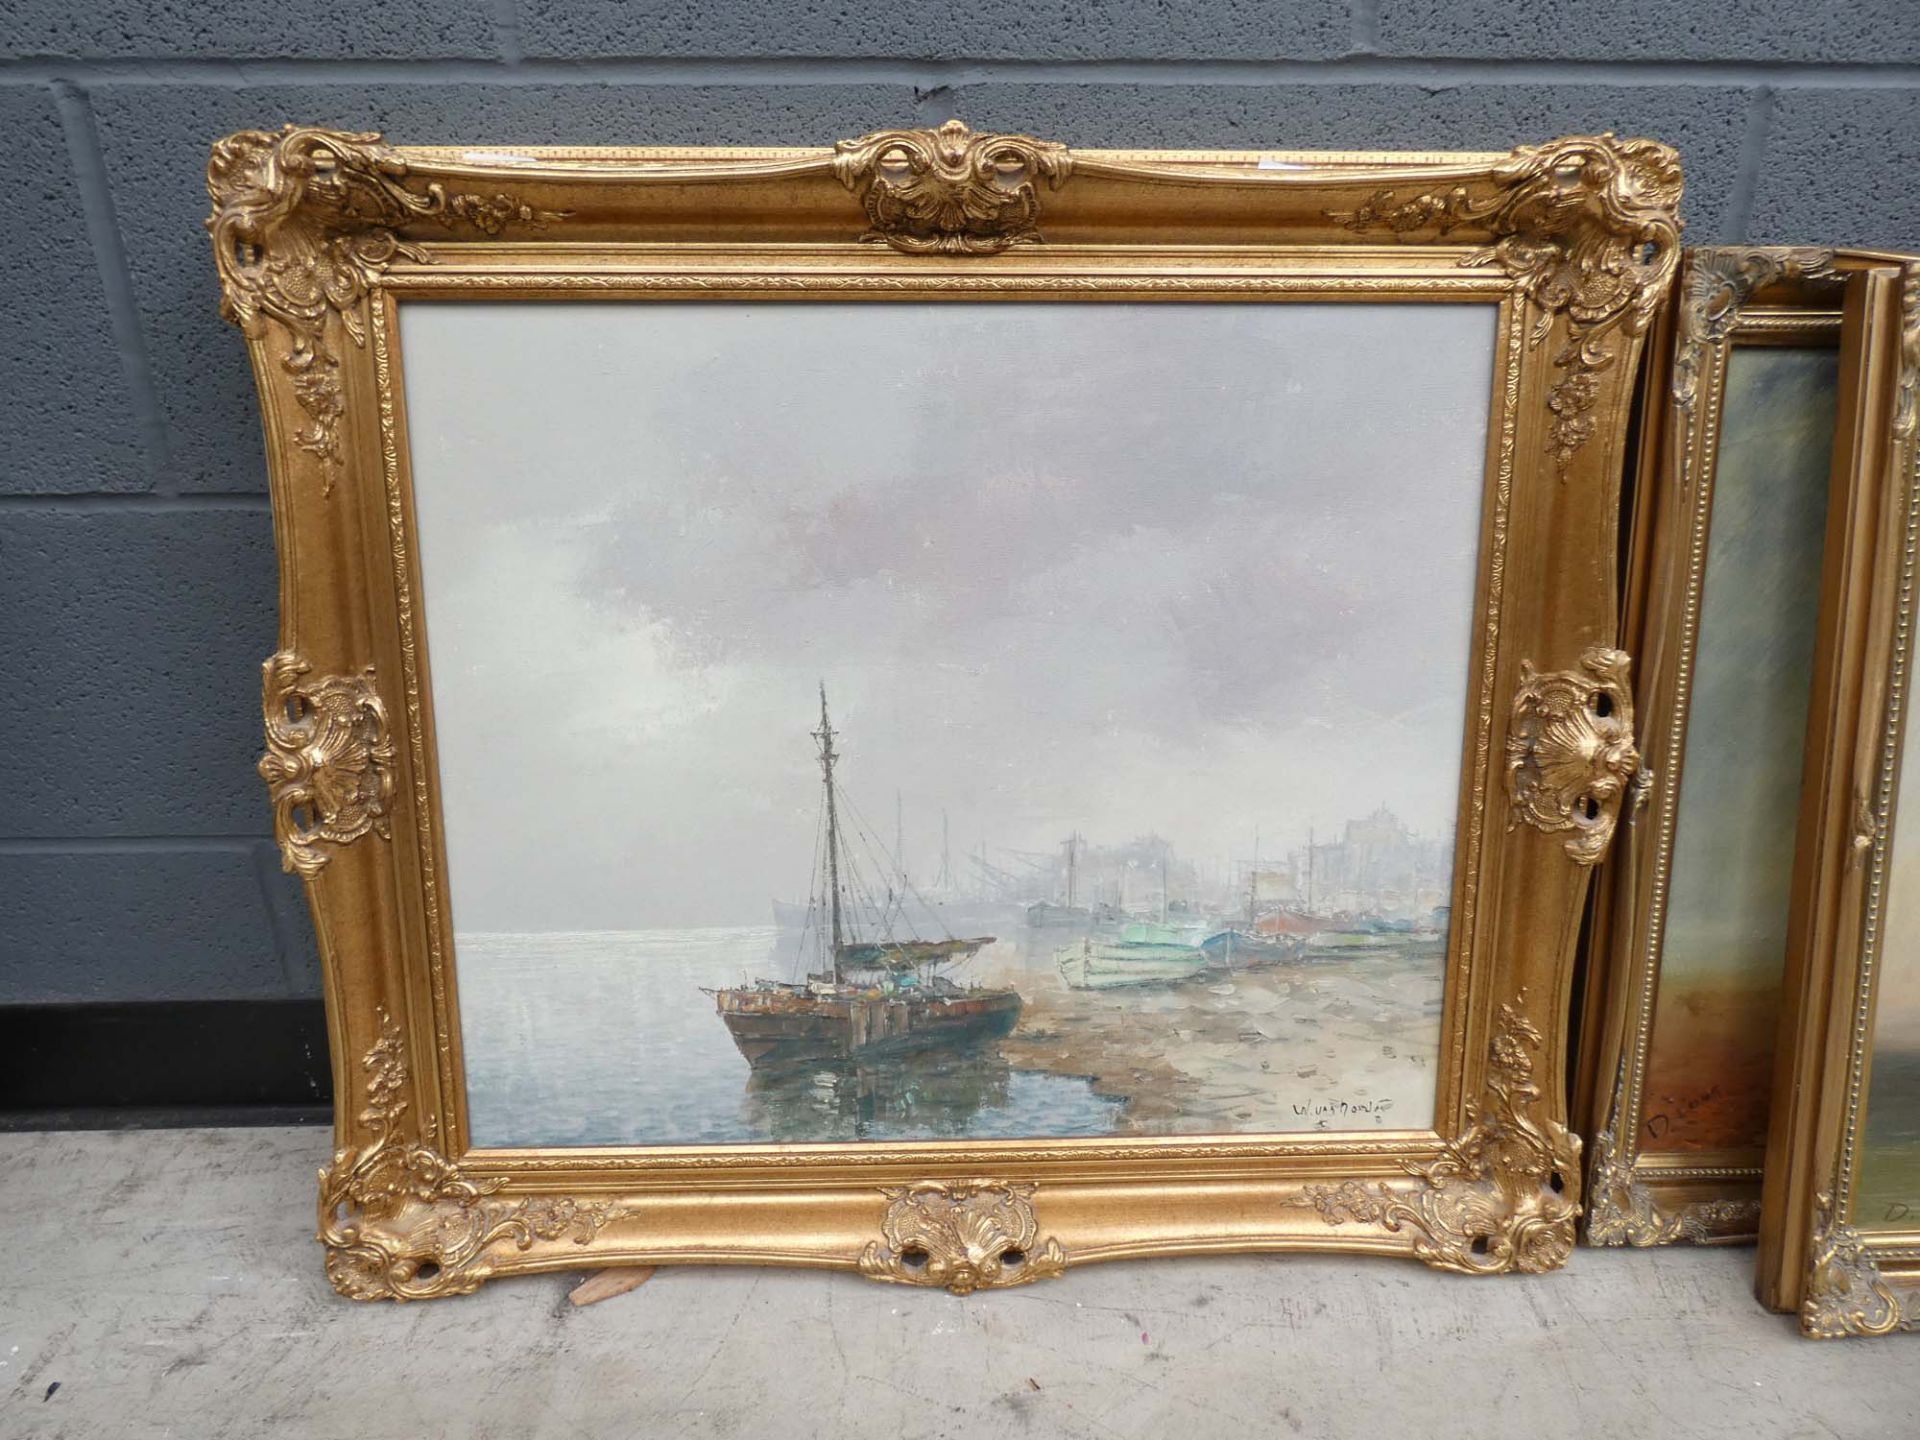 Oil on canvas - maritime scene